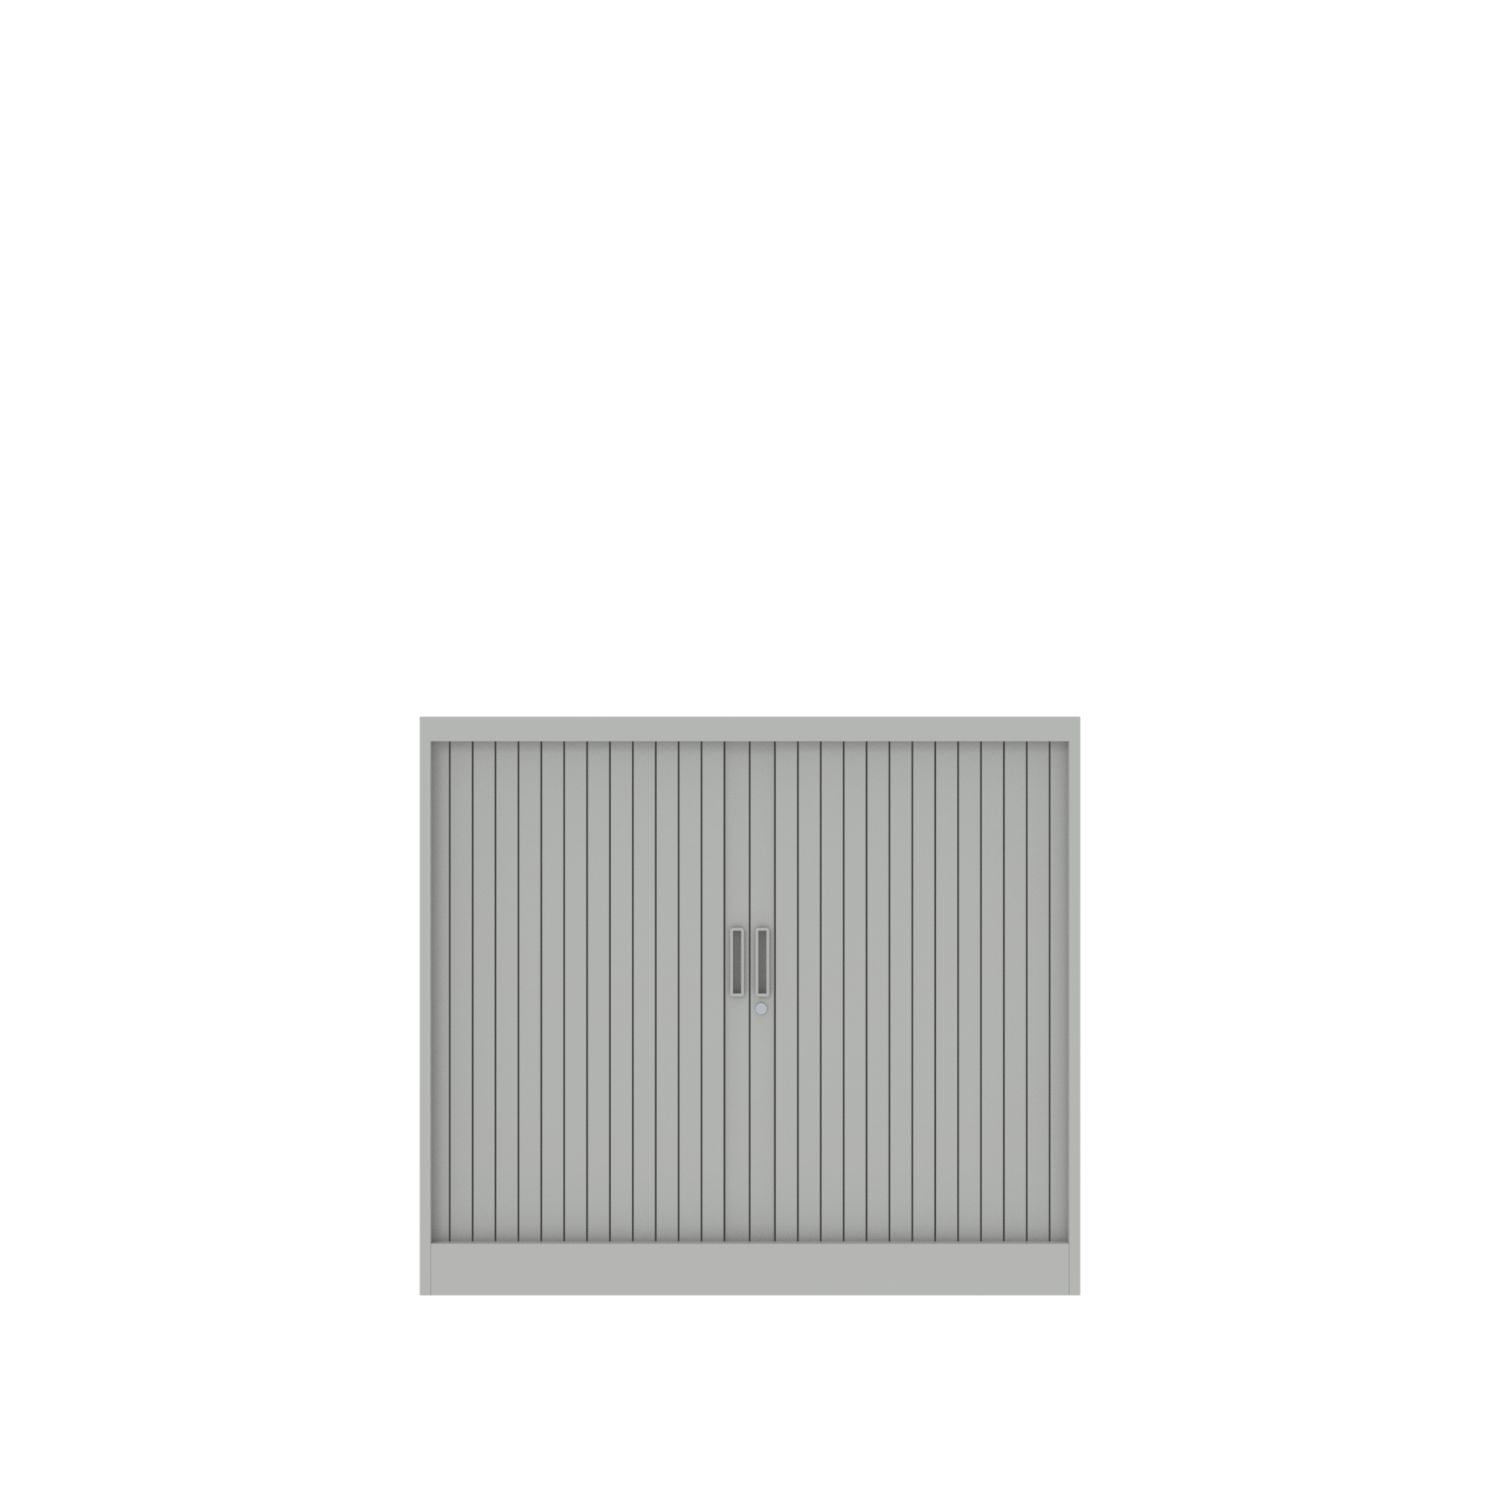 lensvelt design team tambour cabinet 120 cm 45 cm x 105 cm high base 2 shelves light grey ral7035